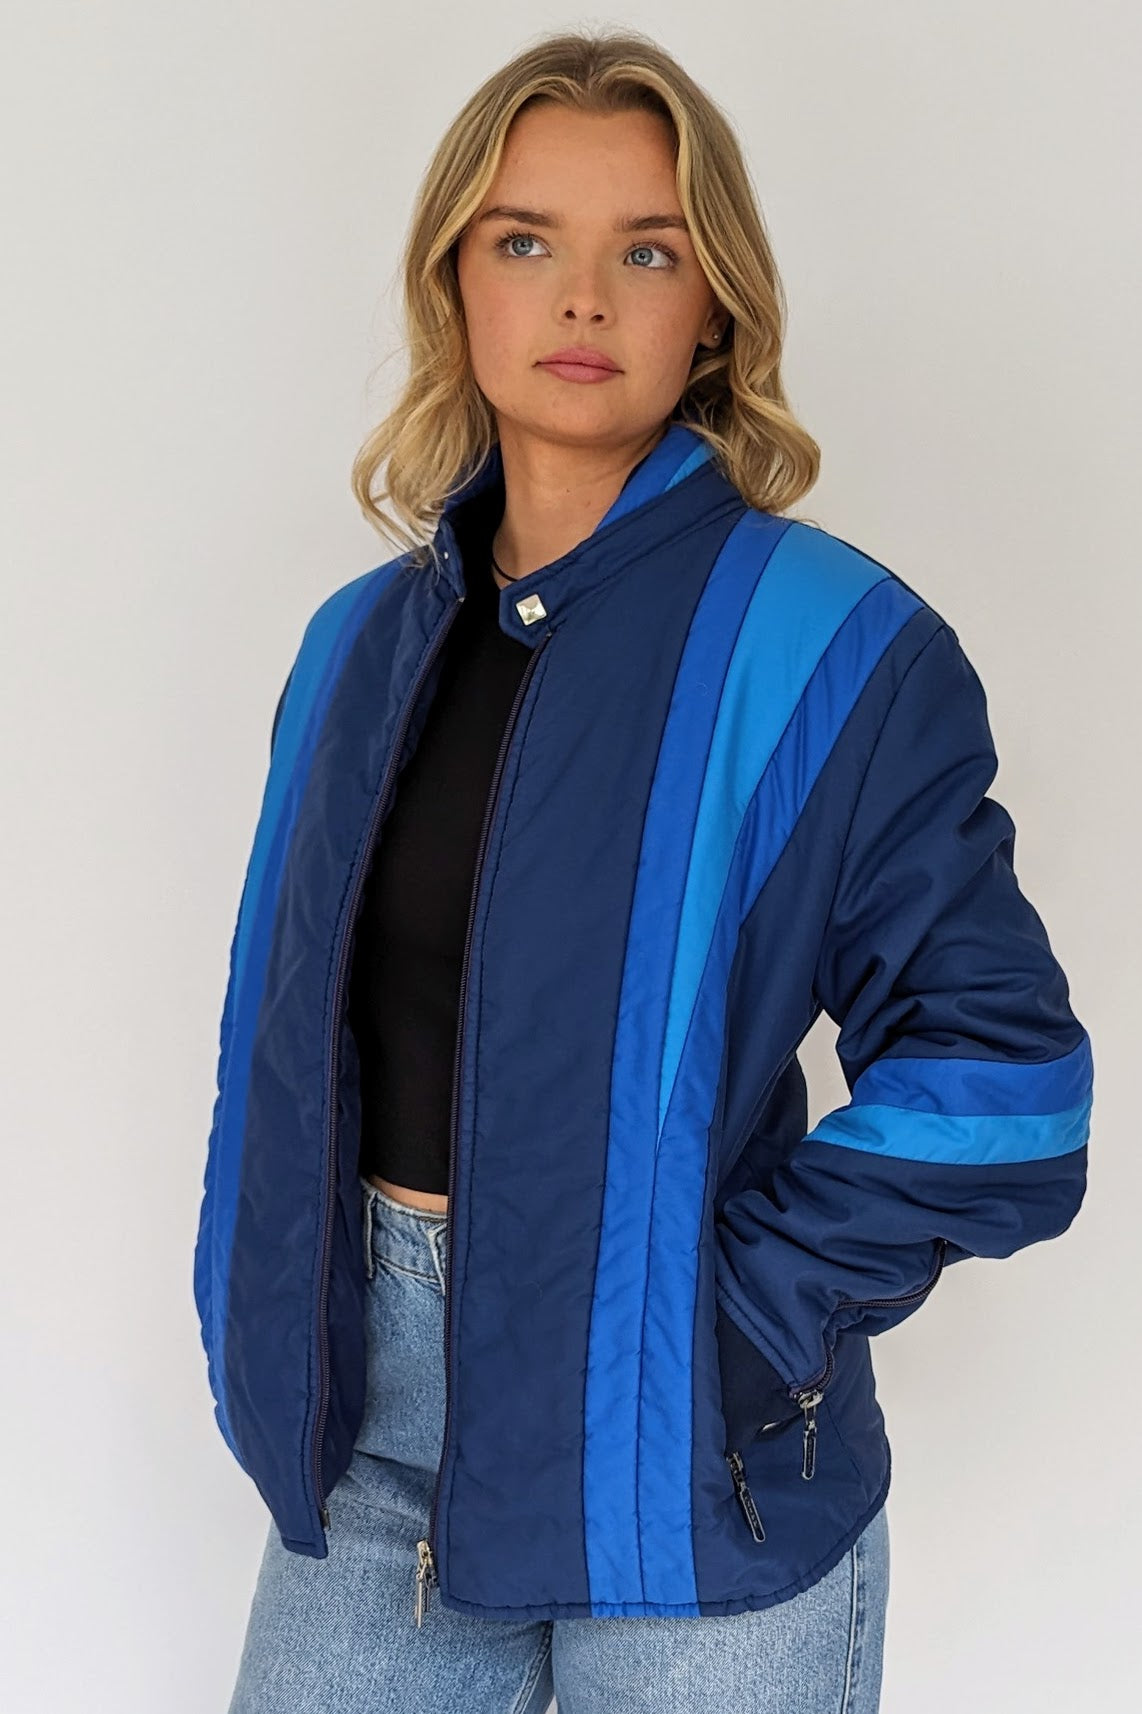 retro blue ski jacket with pockets